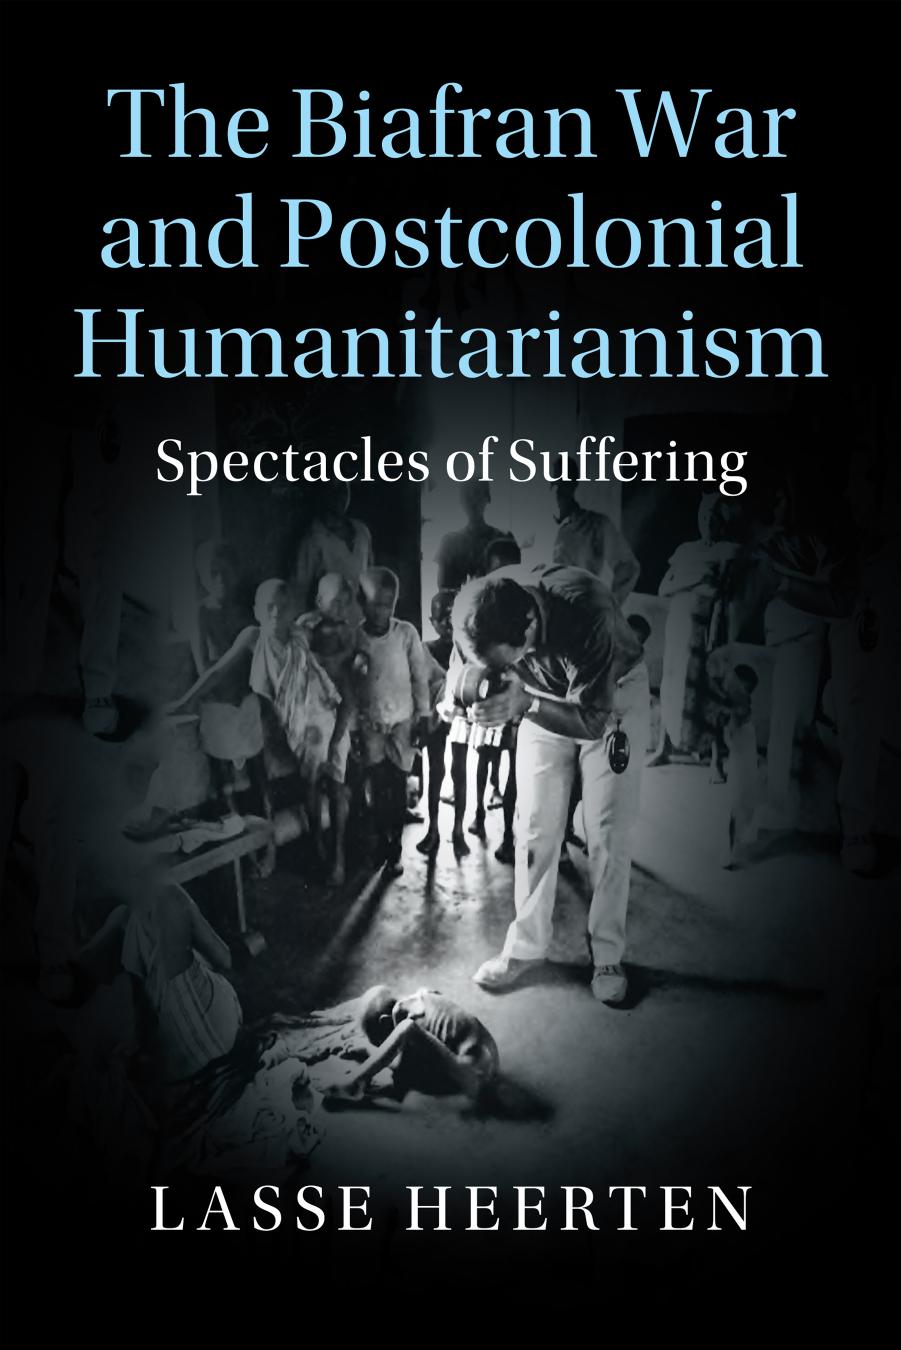 The Biafran War and Postcolonial Humanitarianism by Lasse Heerten